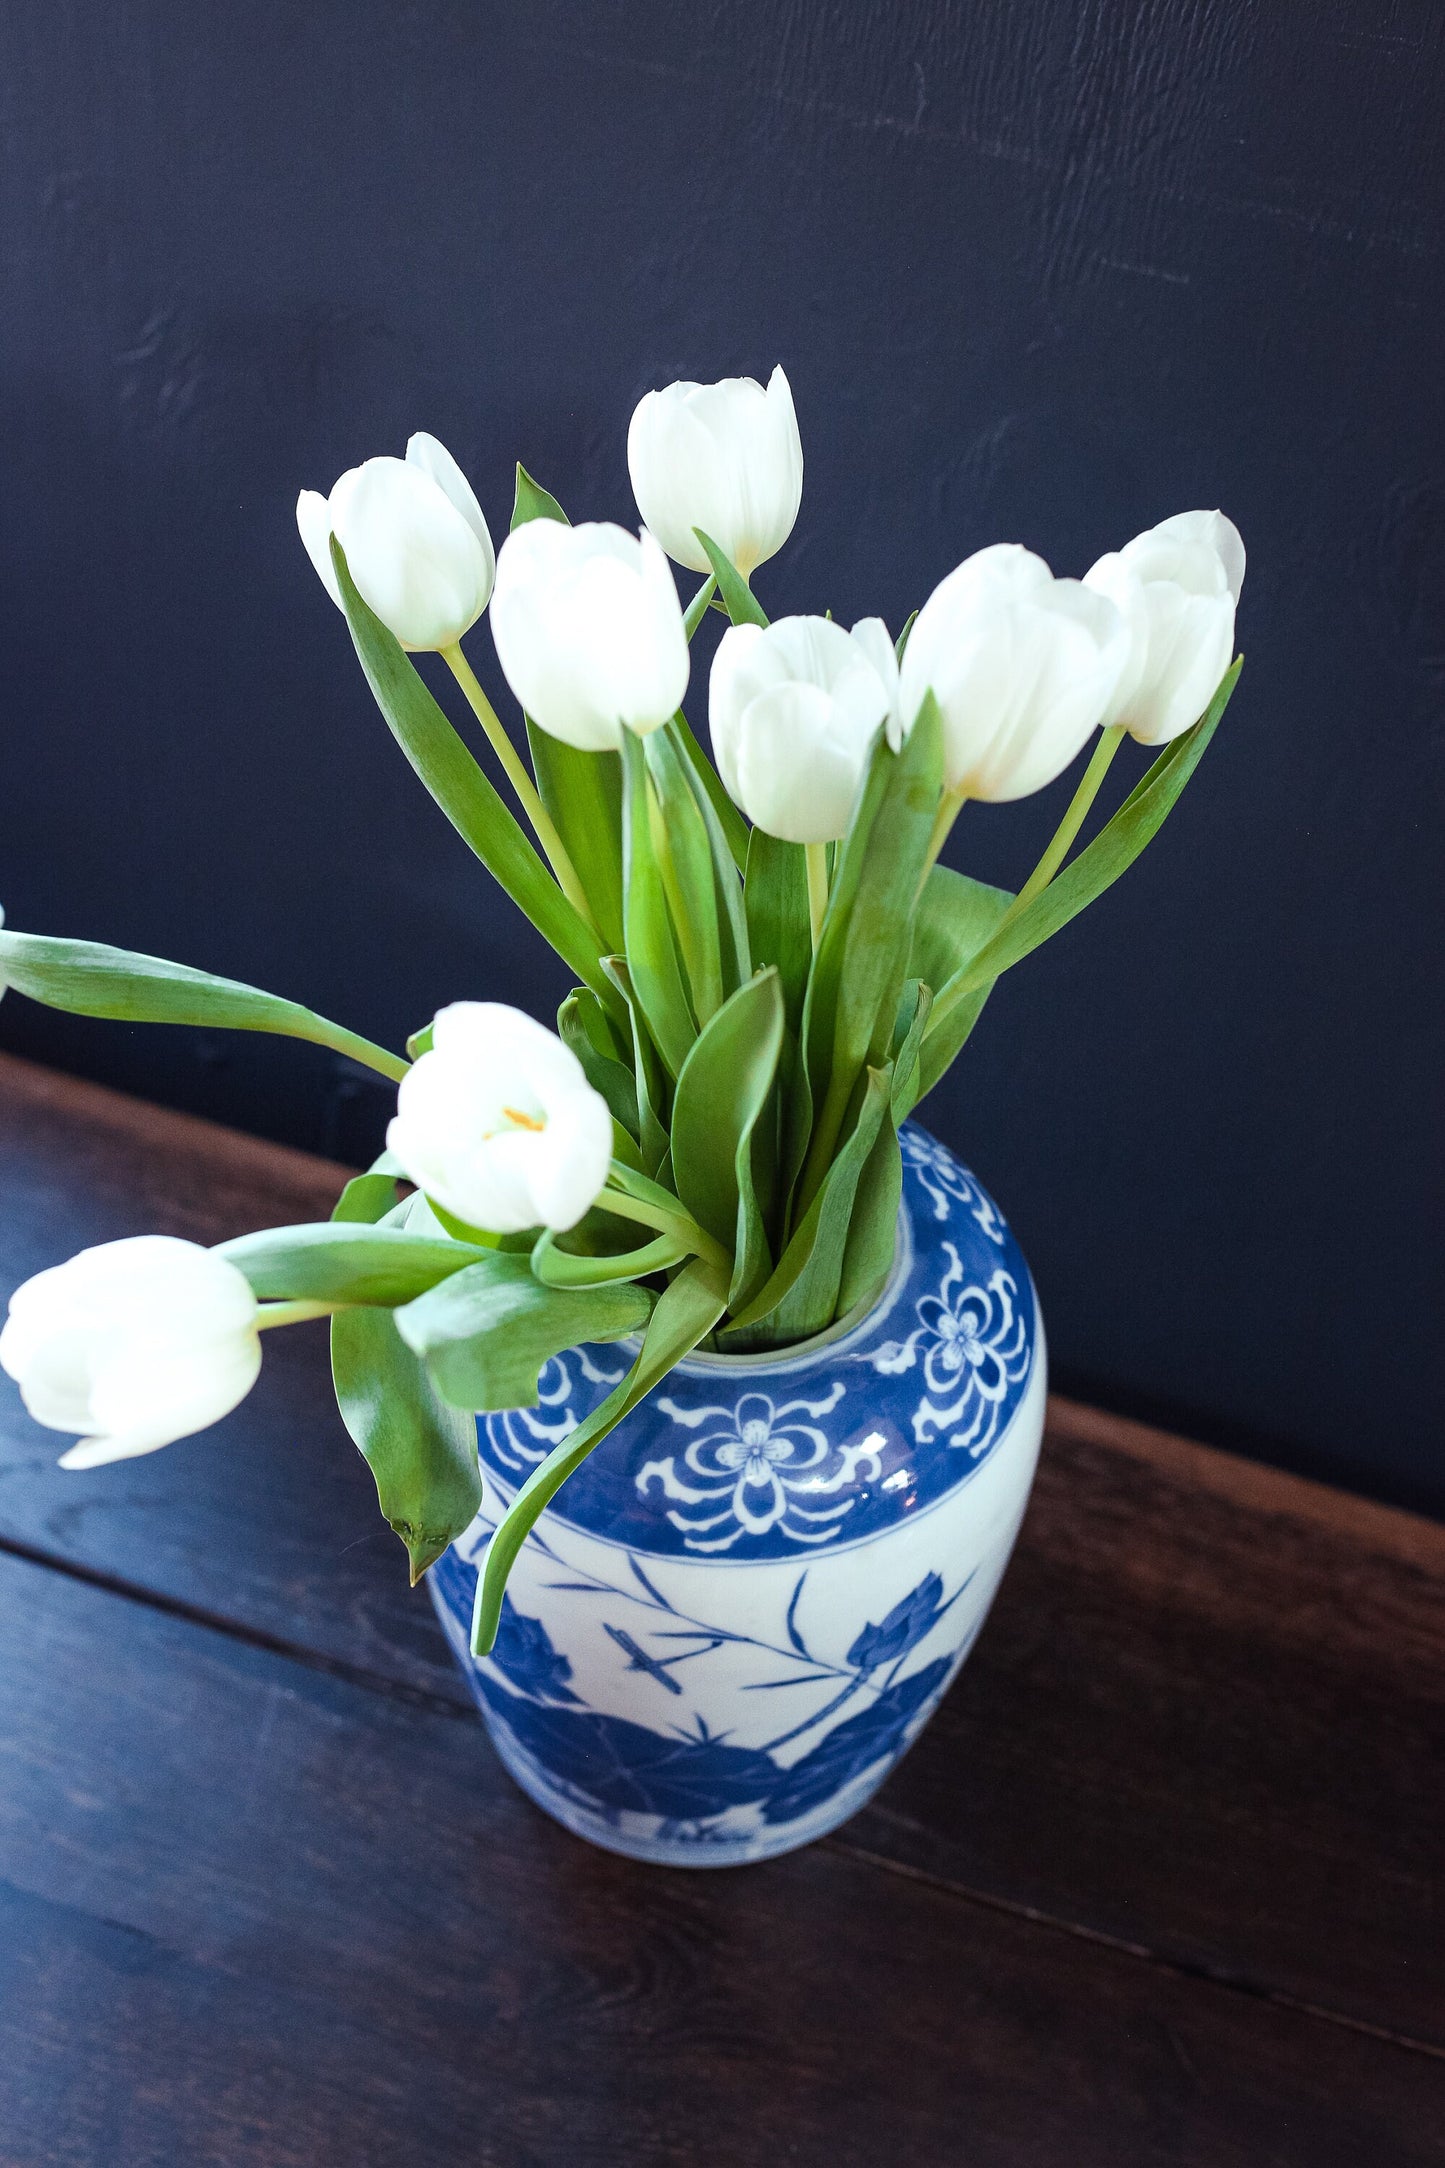 Blue & White Porcelain Hand Painted Vase with Lotus Dragonfly - Vintage Blue White Round Ceramic Vase